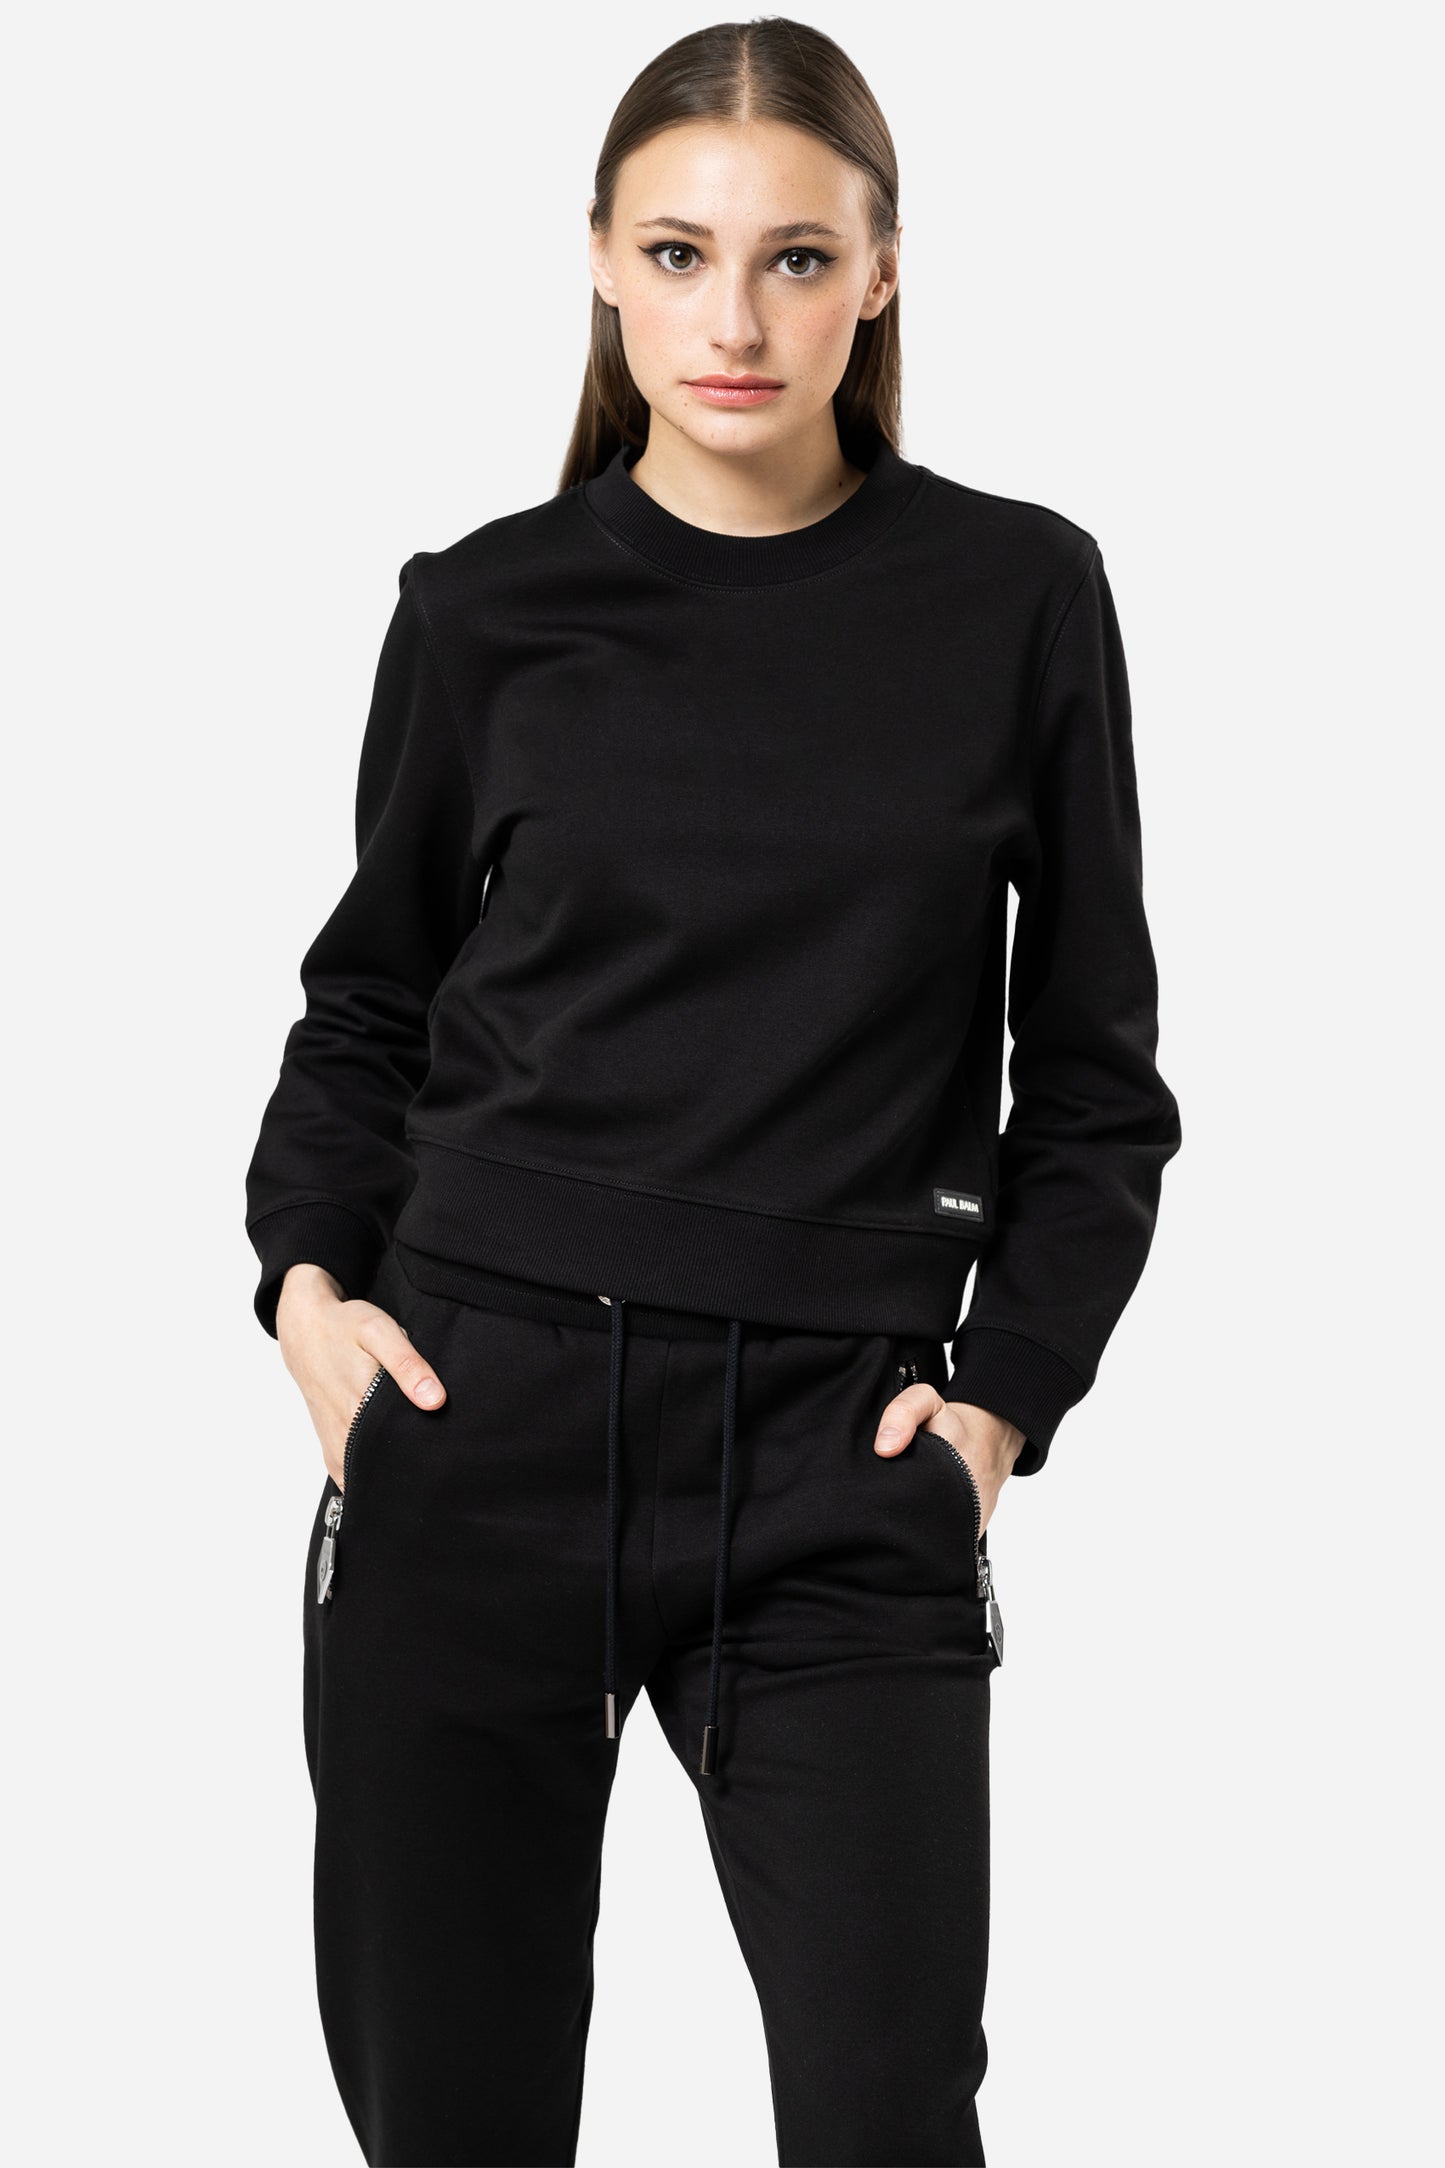 Sweatshirt Basic schwarz